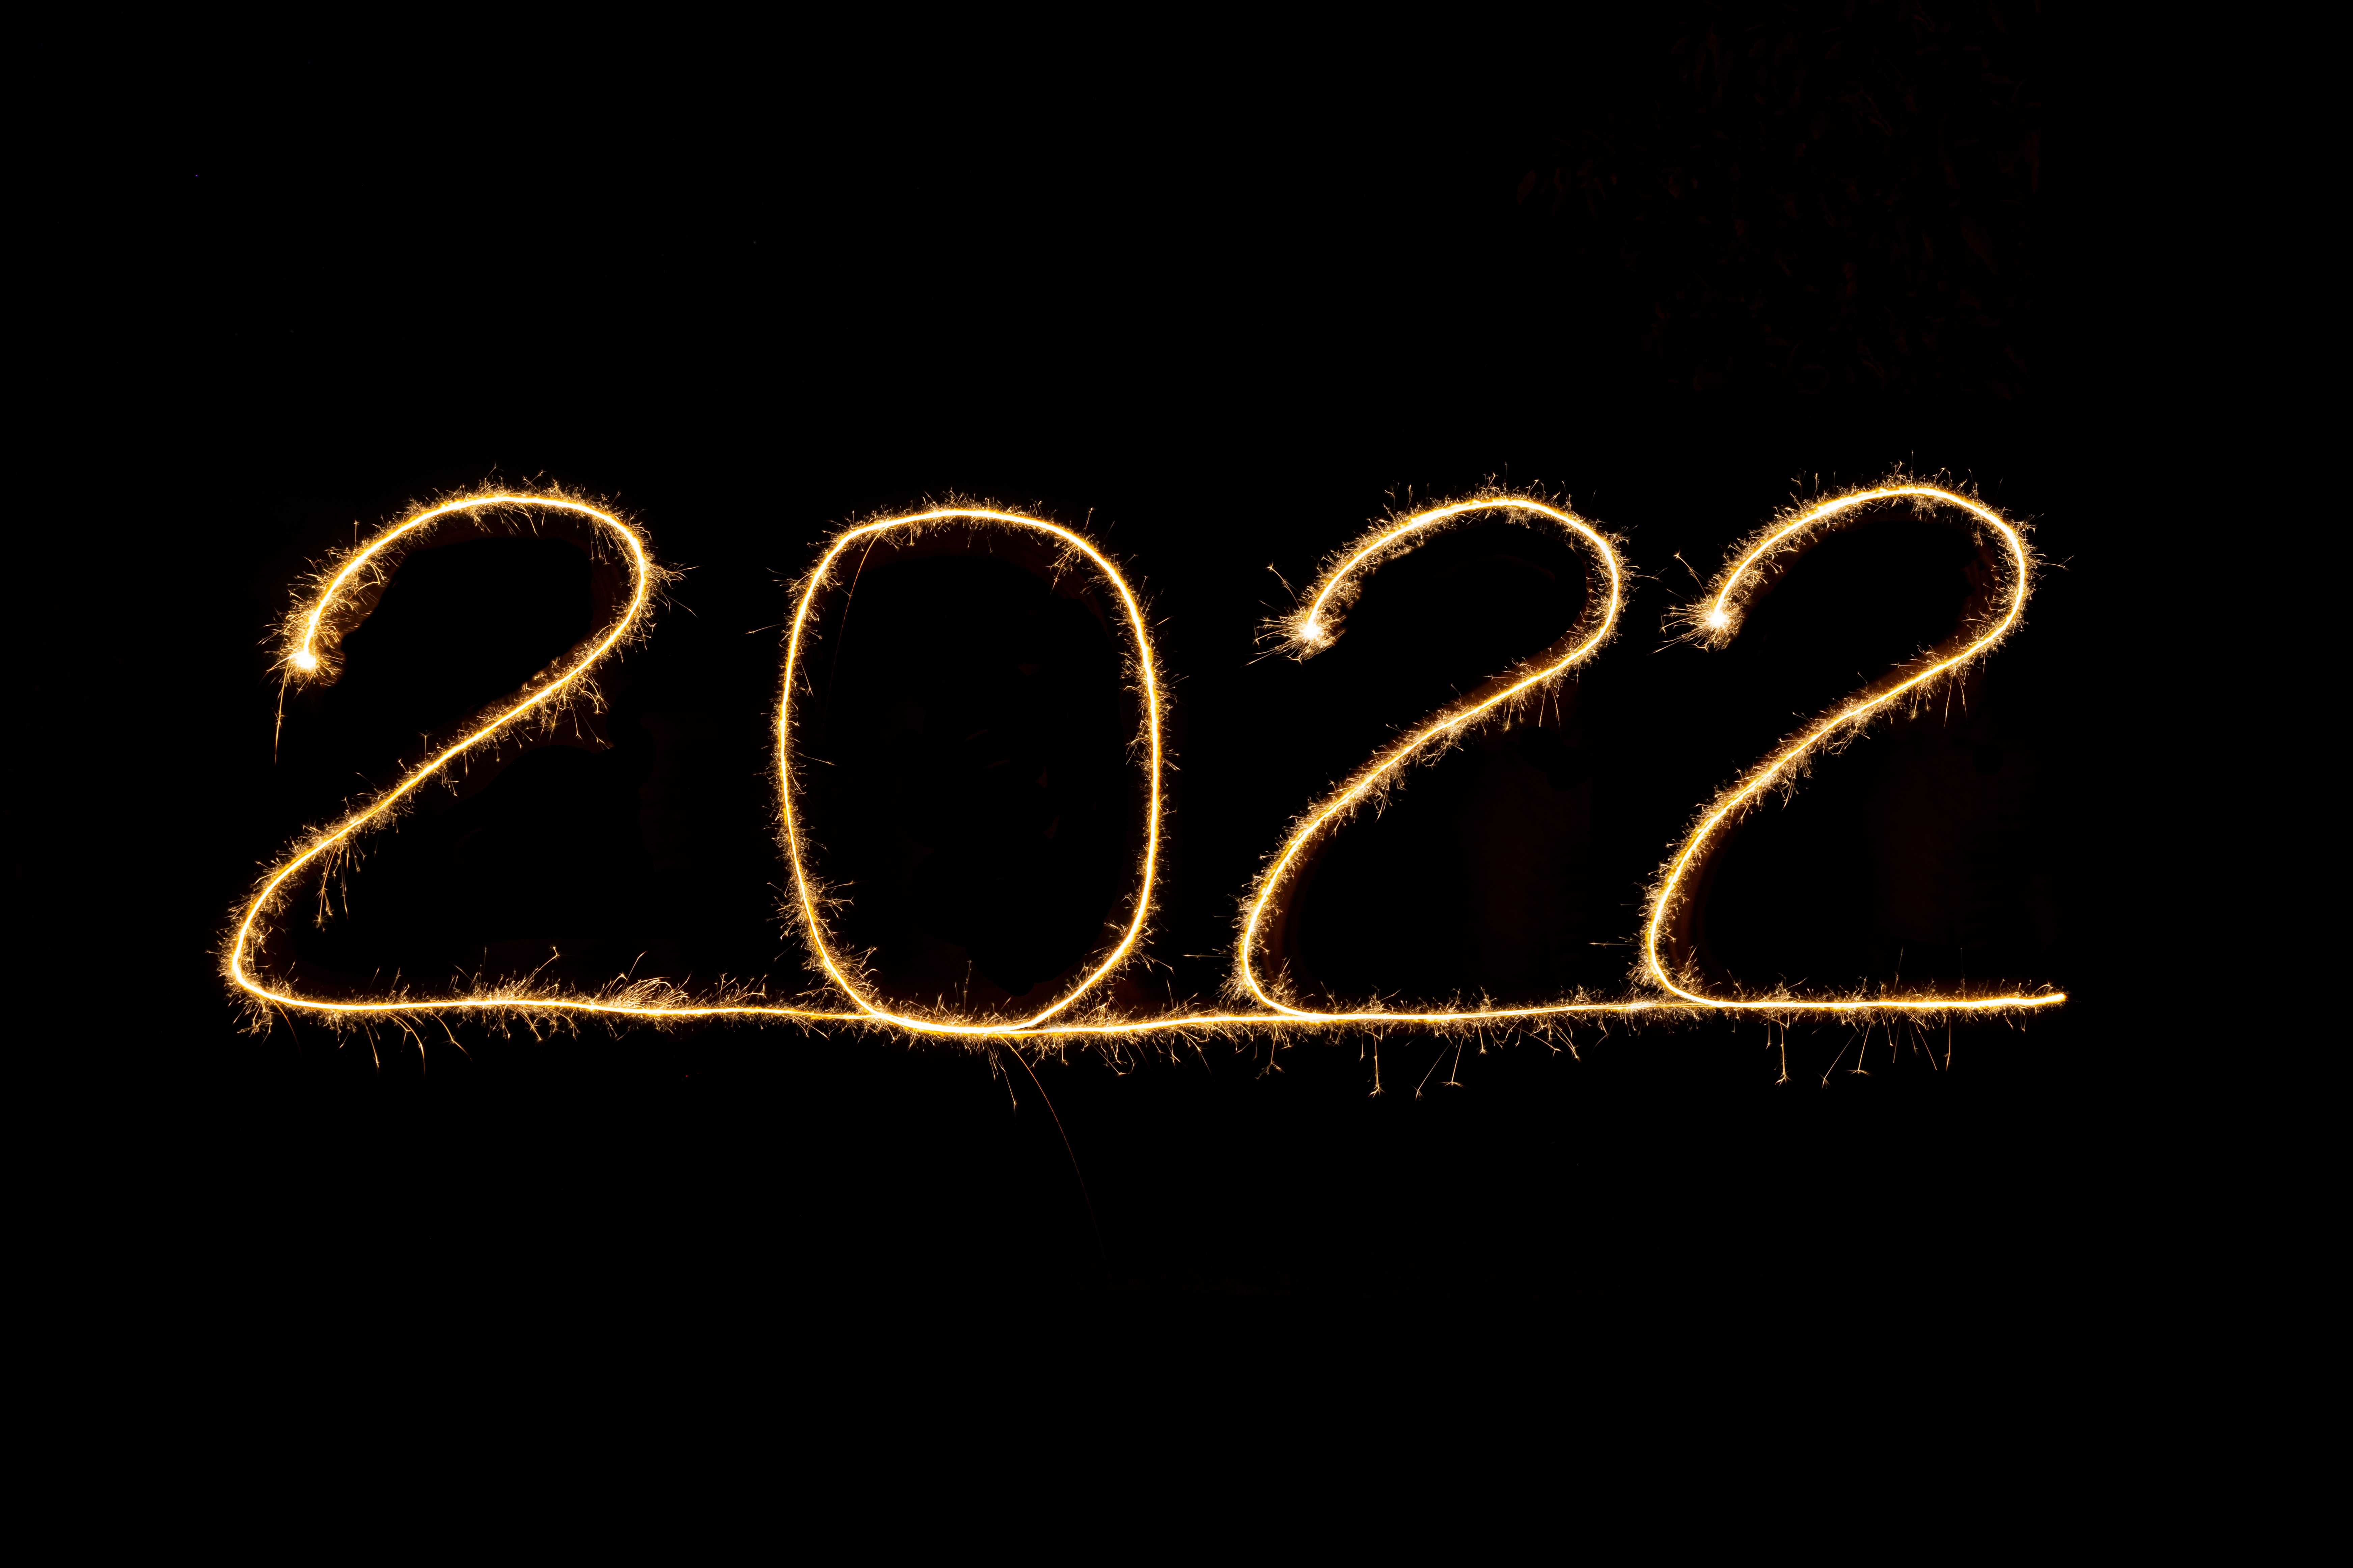 Bye-bye 2021